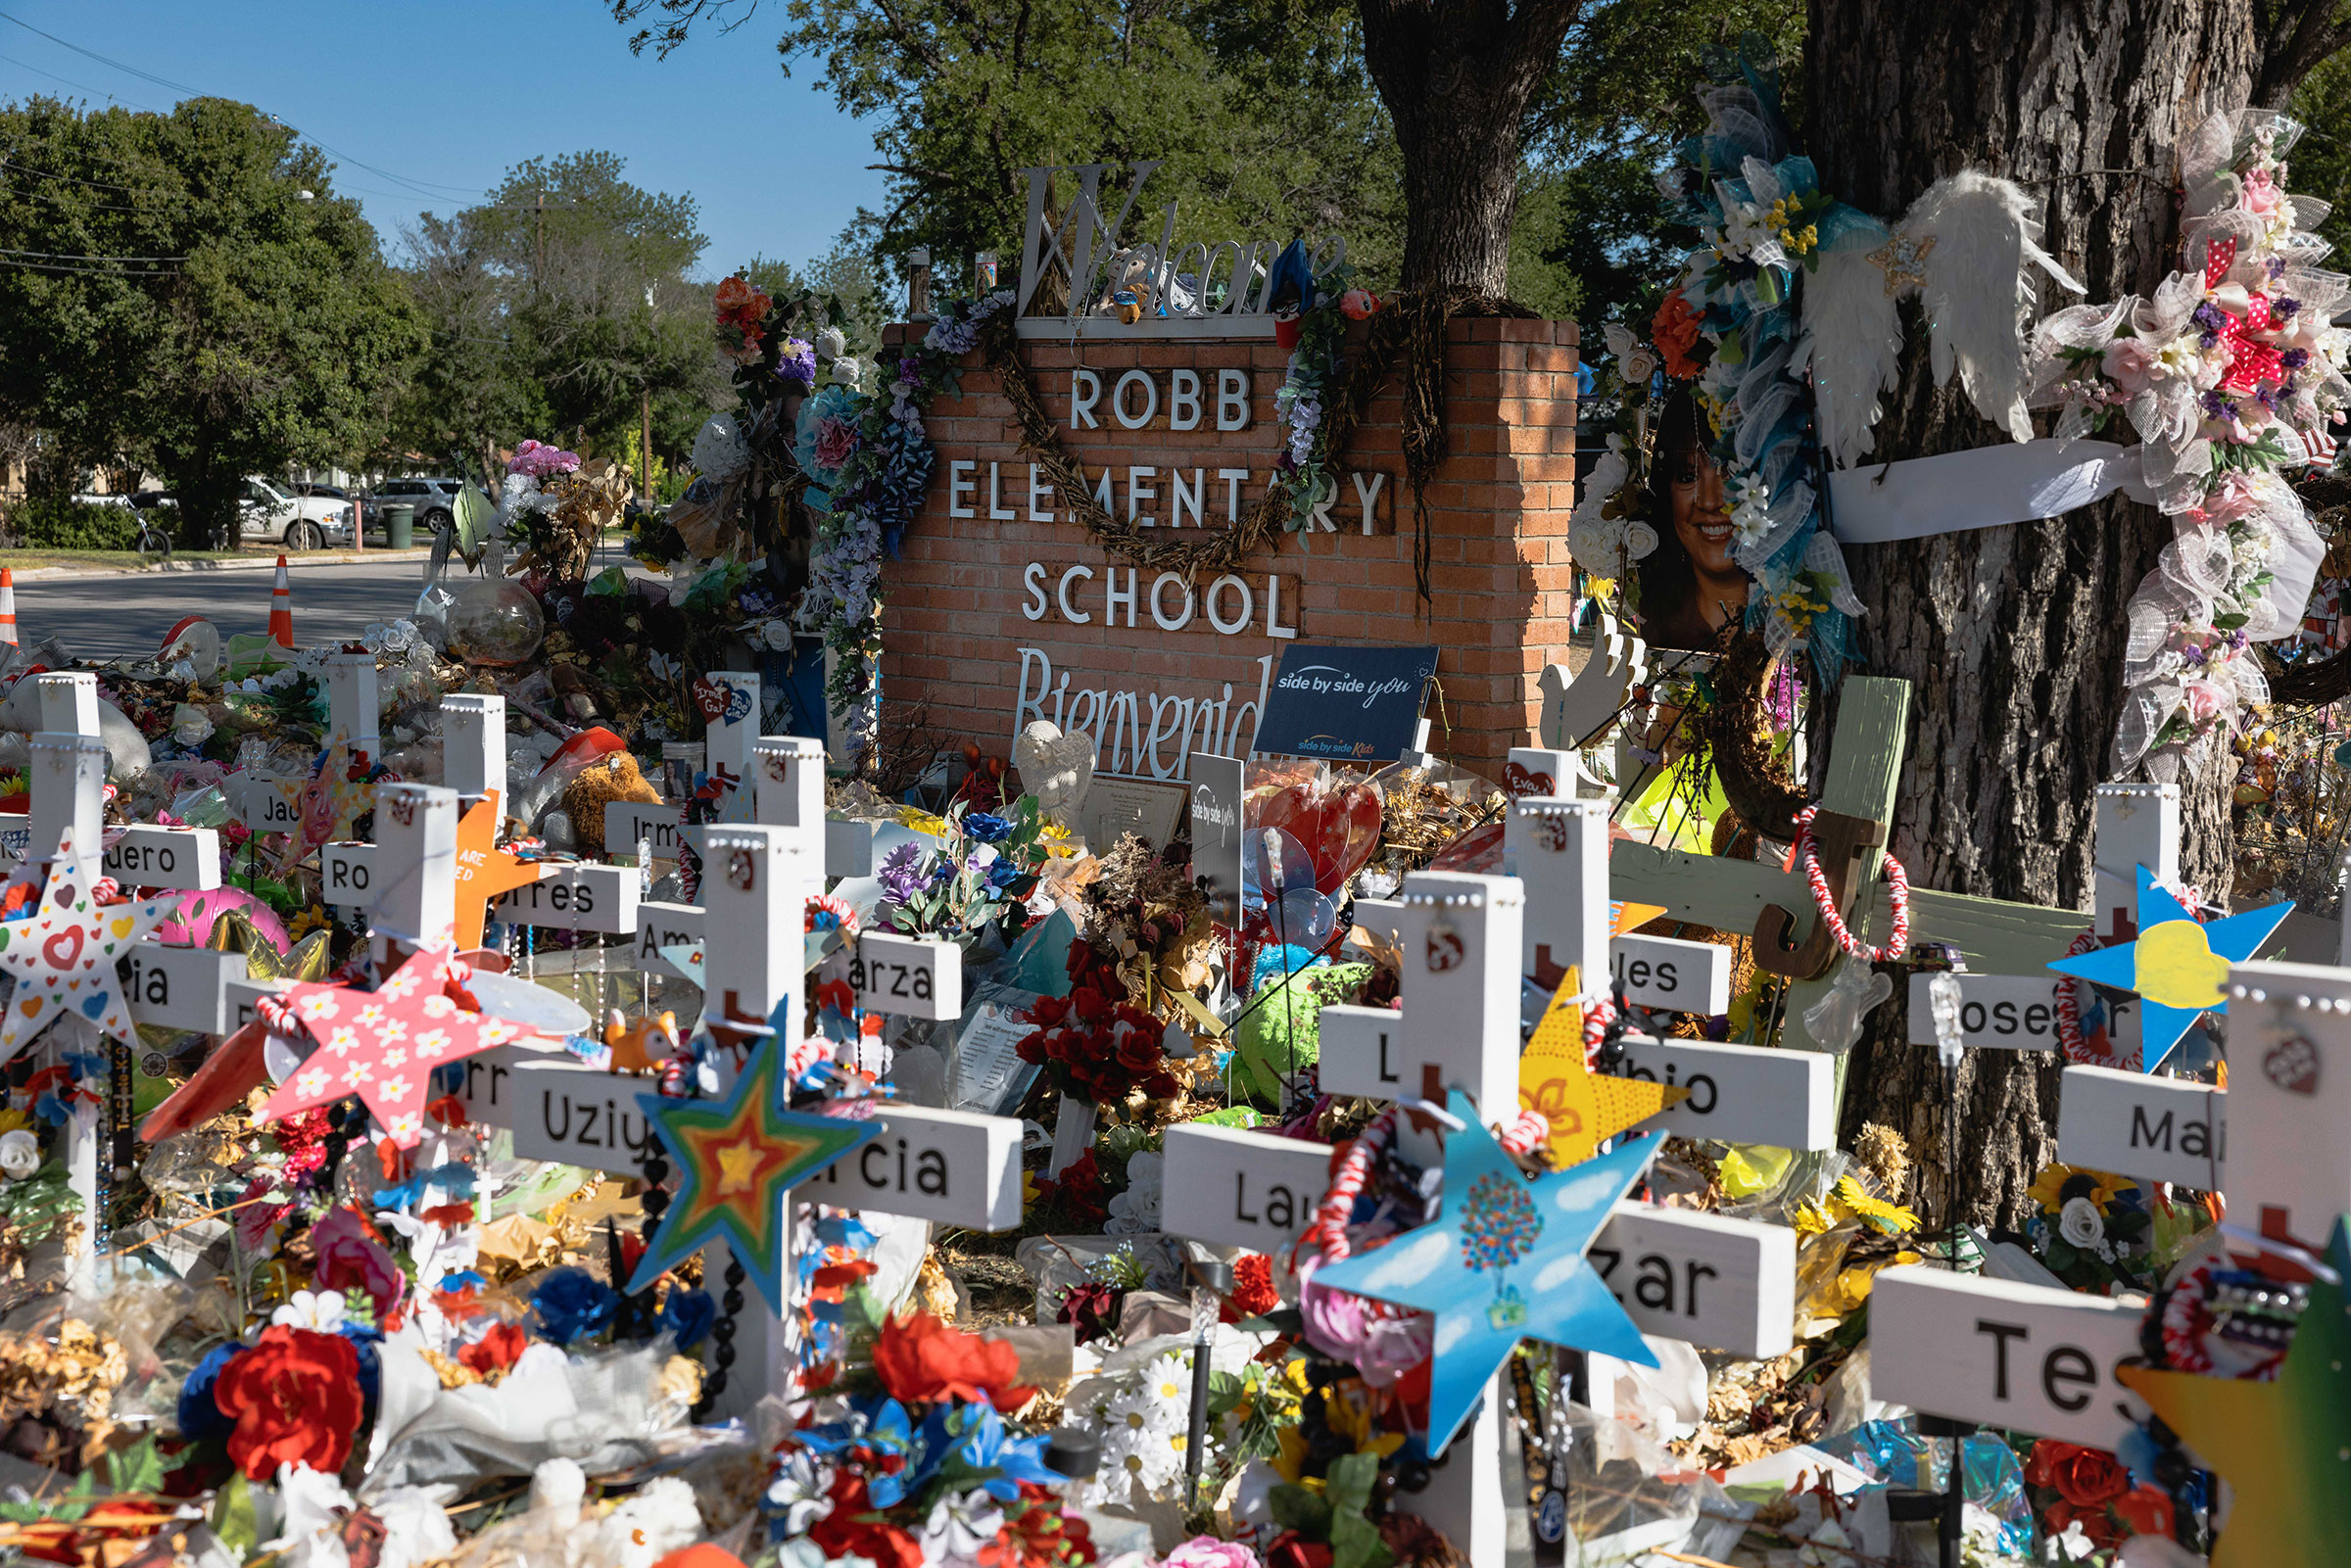 The memorial for the massacre at Robb Elementary School on June 24. (Jordan Vonderhaar—Getty Images)